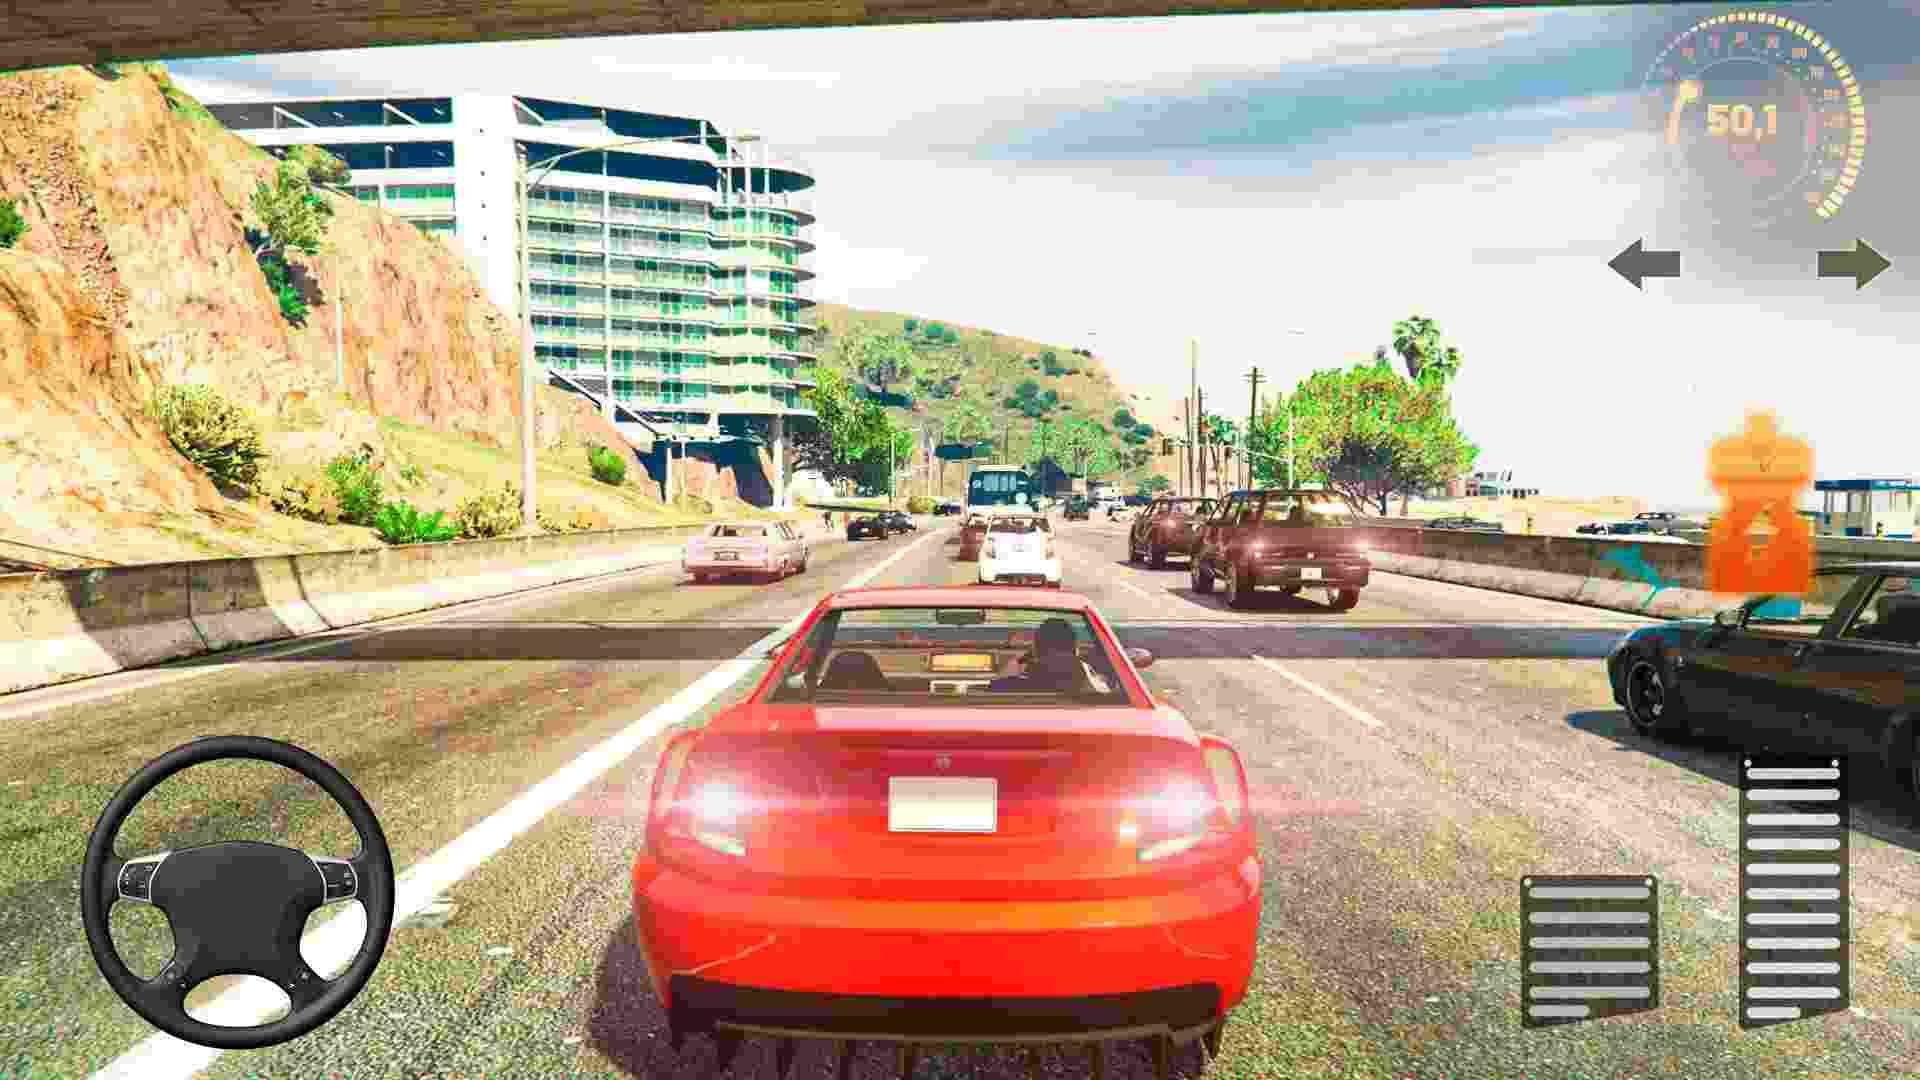 Super Car Simulator Mod